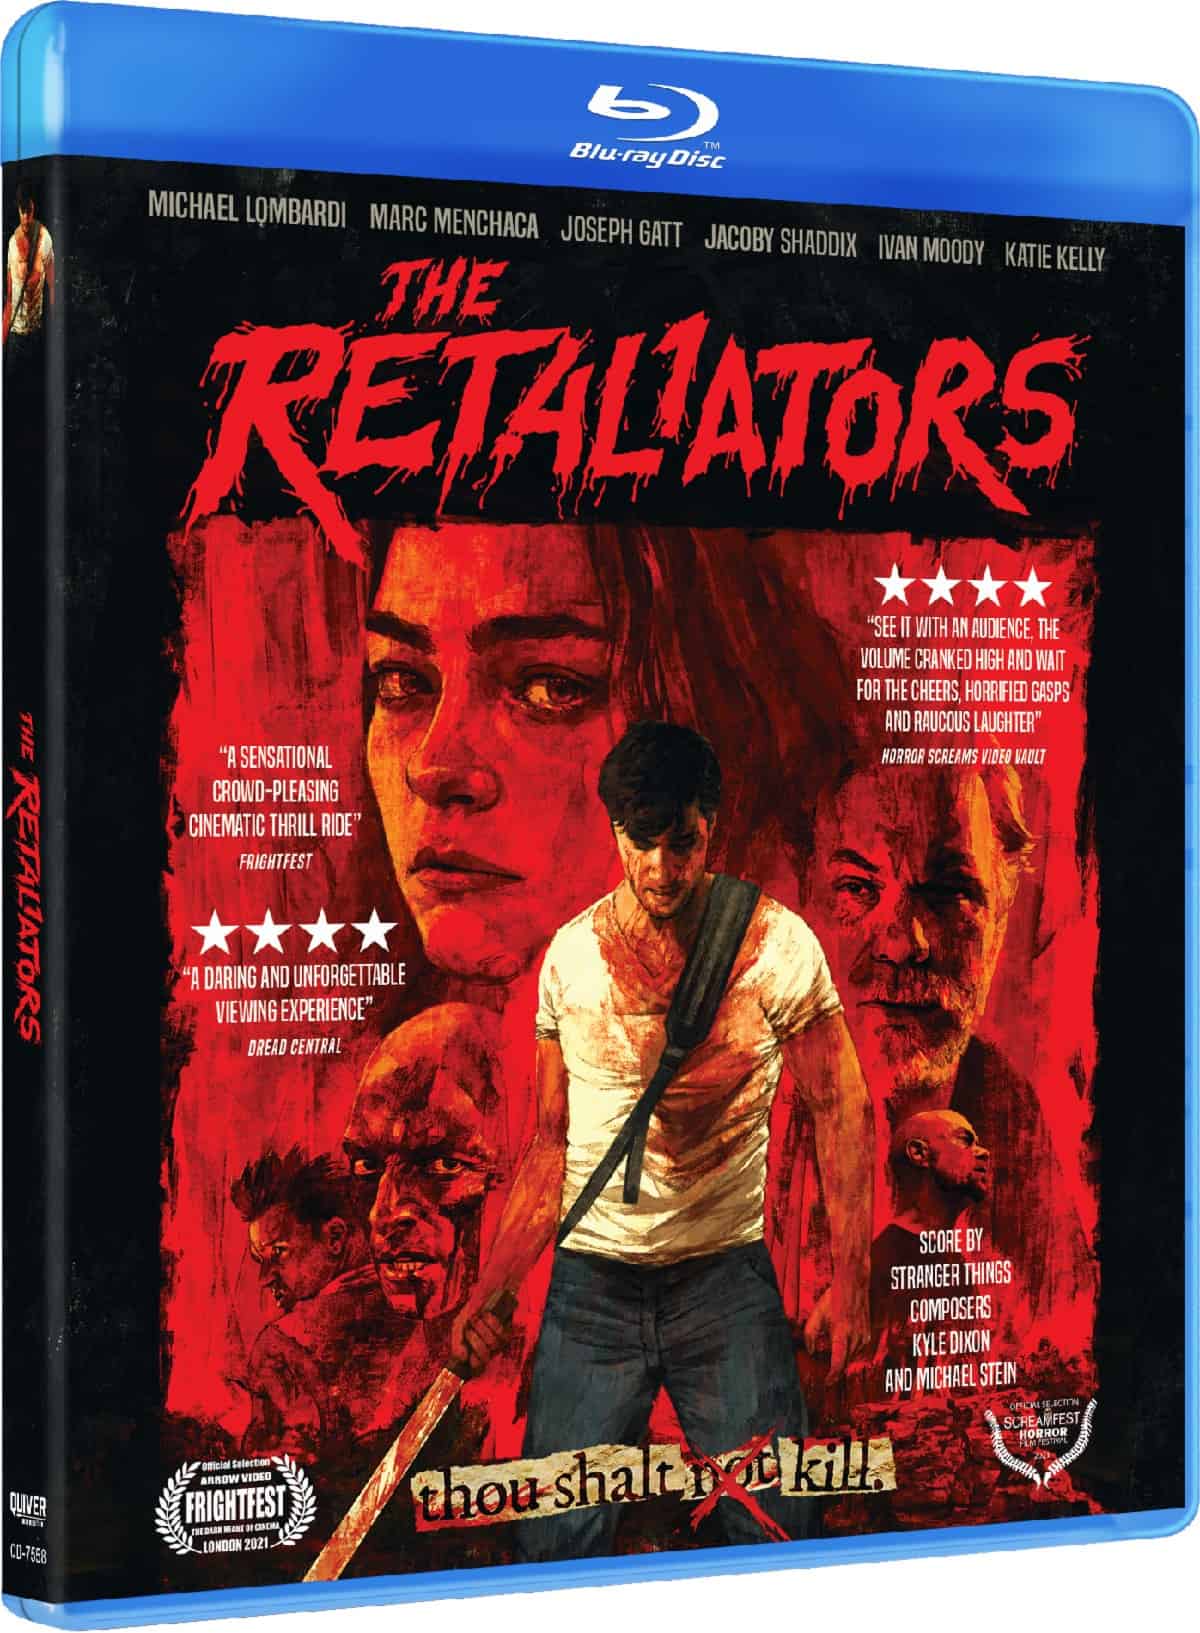 The Retaliators comes to Blu-ray on February 21st 19